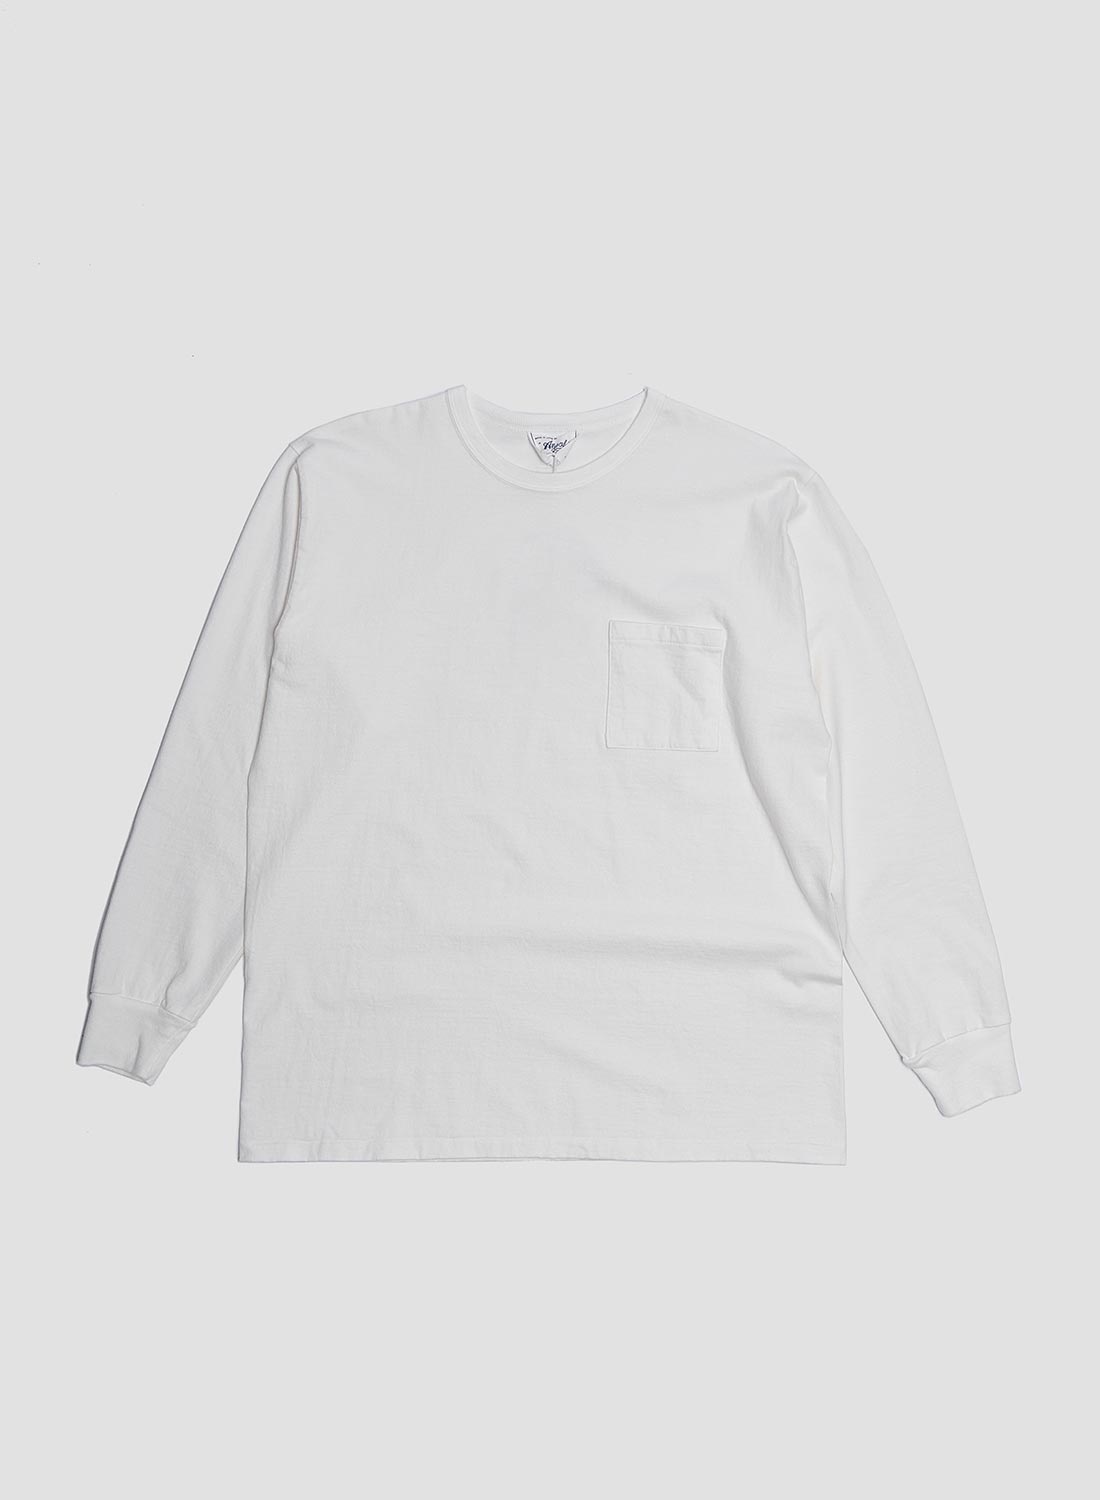 Allevol Heavy Duty Crew Neck Pocket Long Sleeve T-Shirt in White - 1